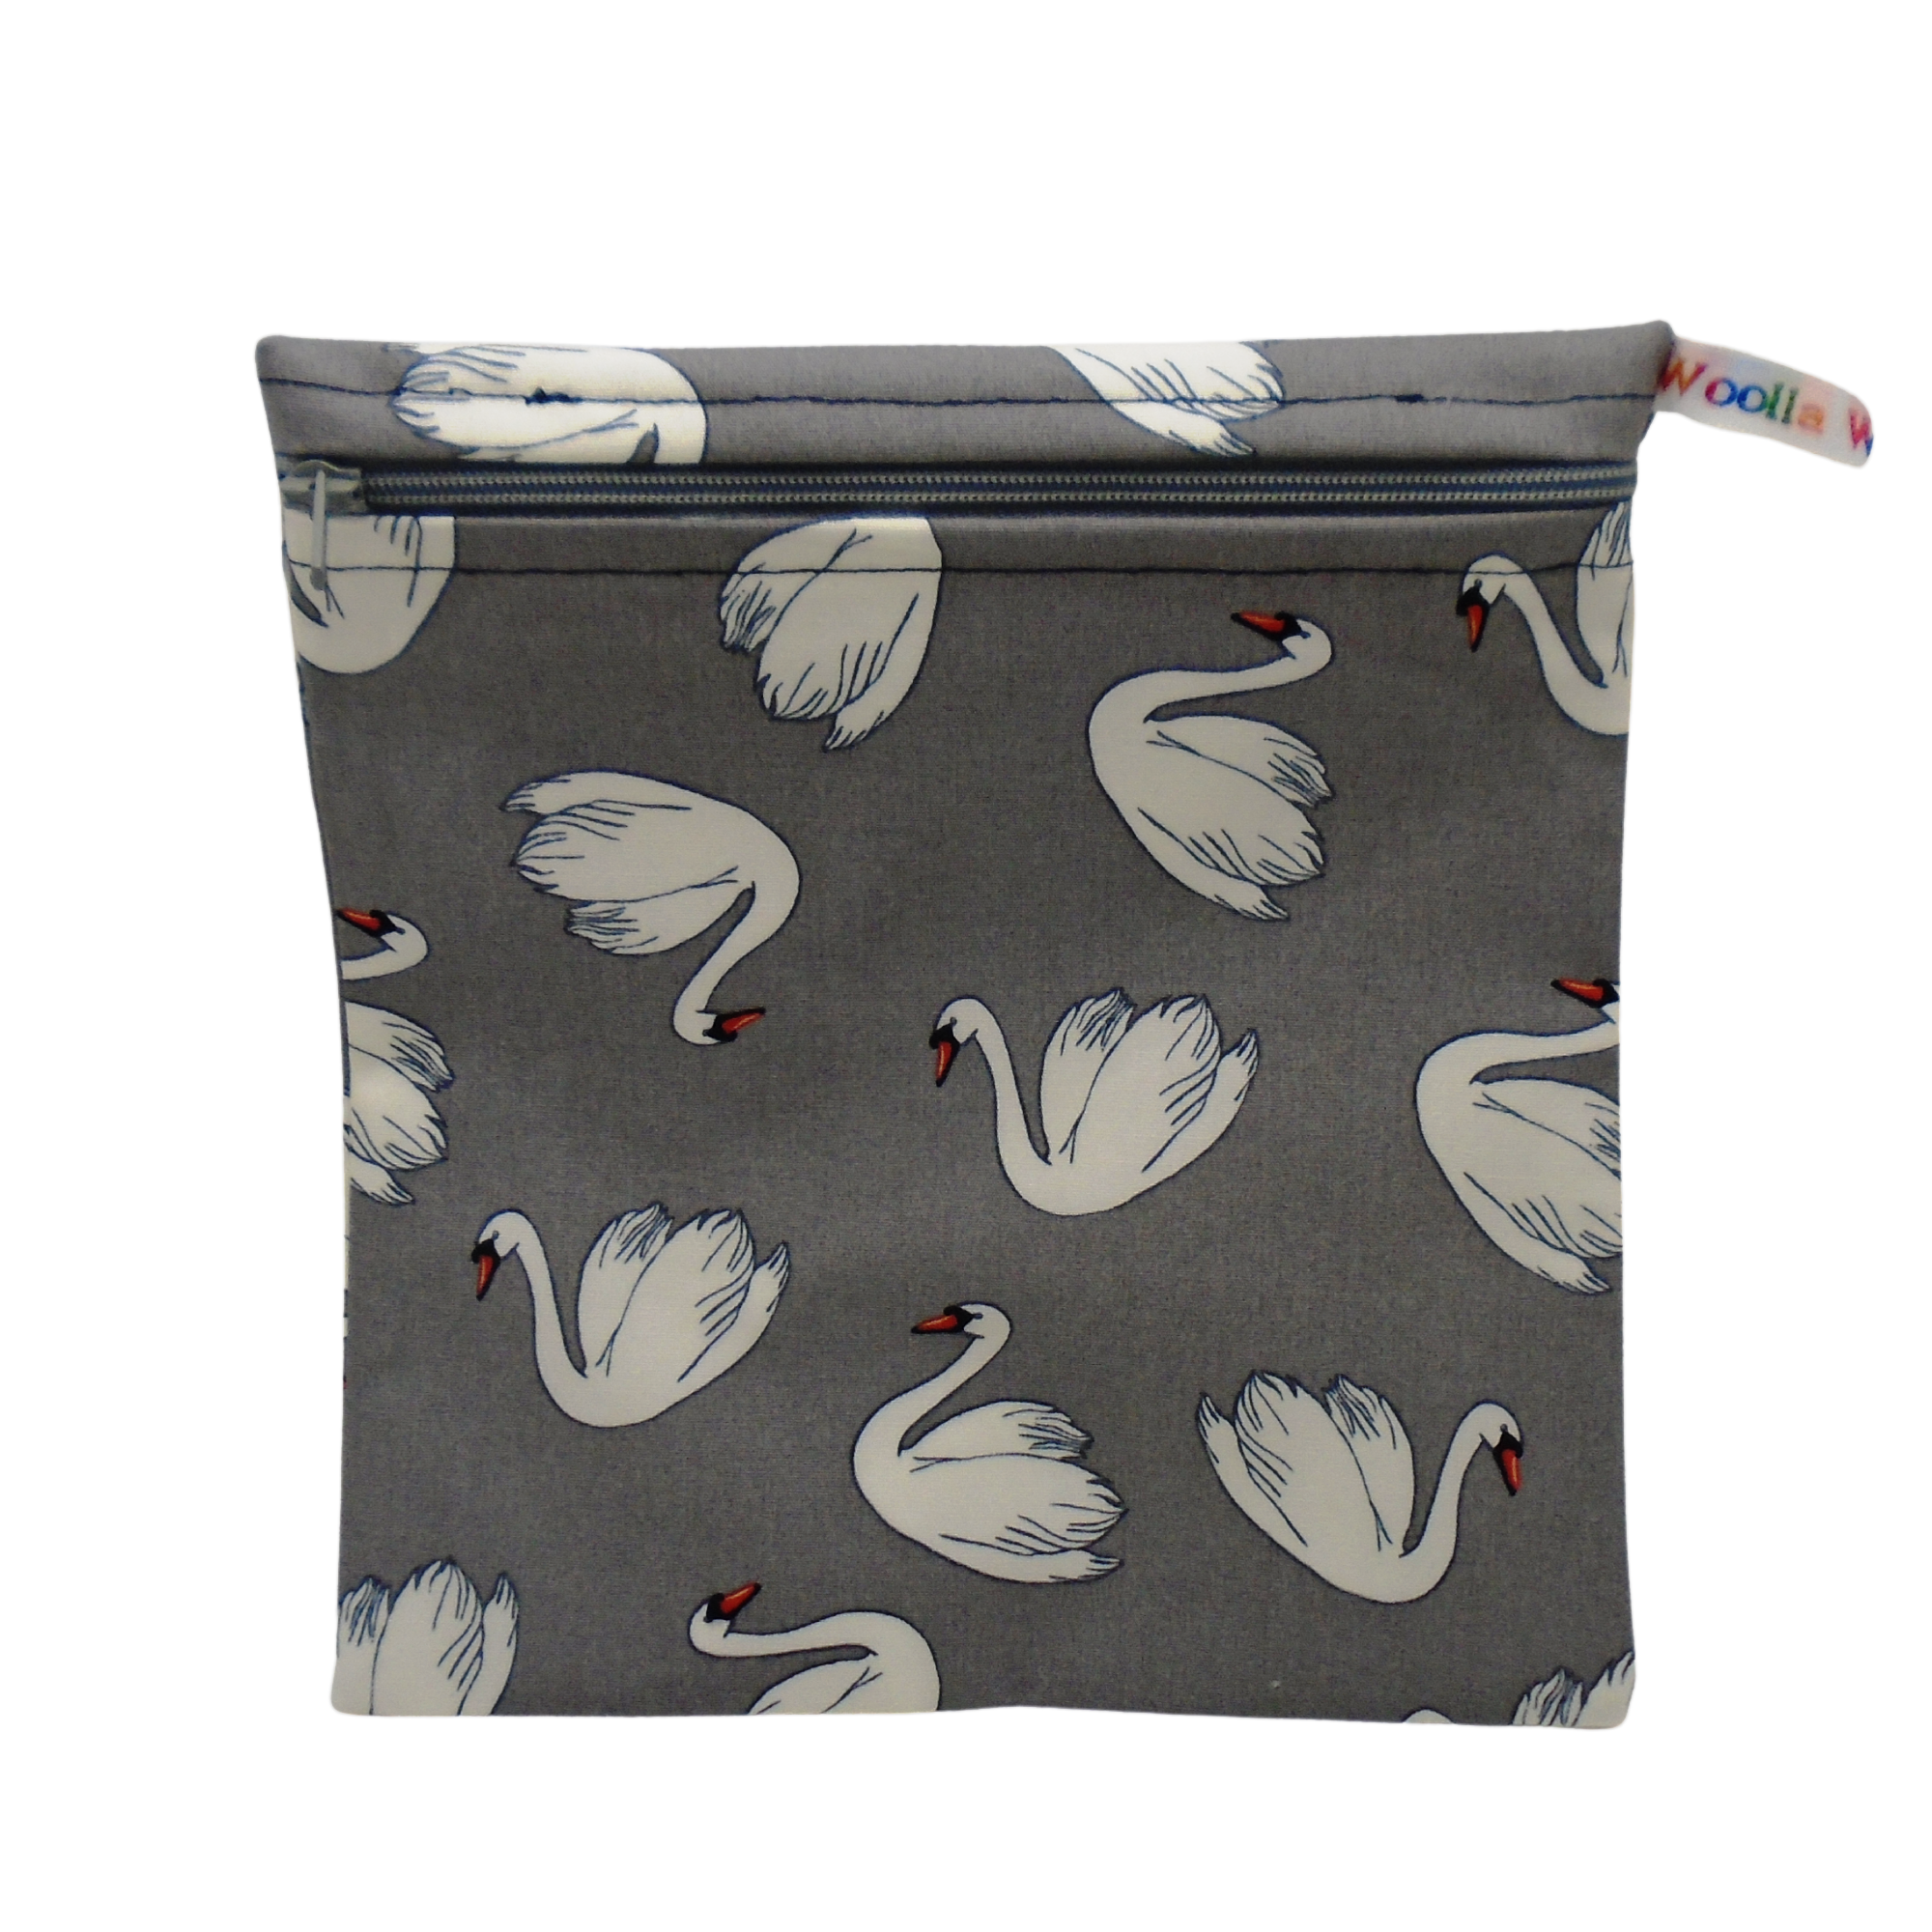 Grey Swan -  Medium Poppins Pouch Reusable Washable Sandwich Bag - Vegan Alternative to Wax Wrap